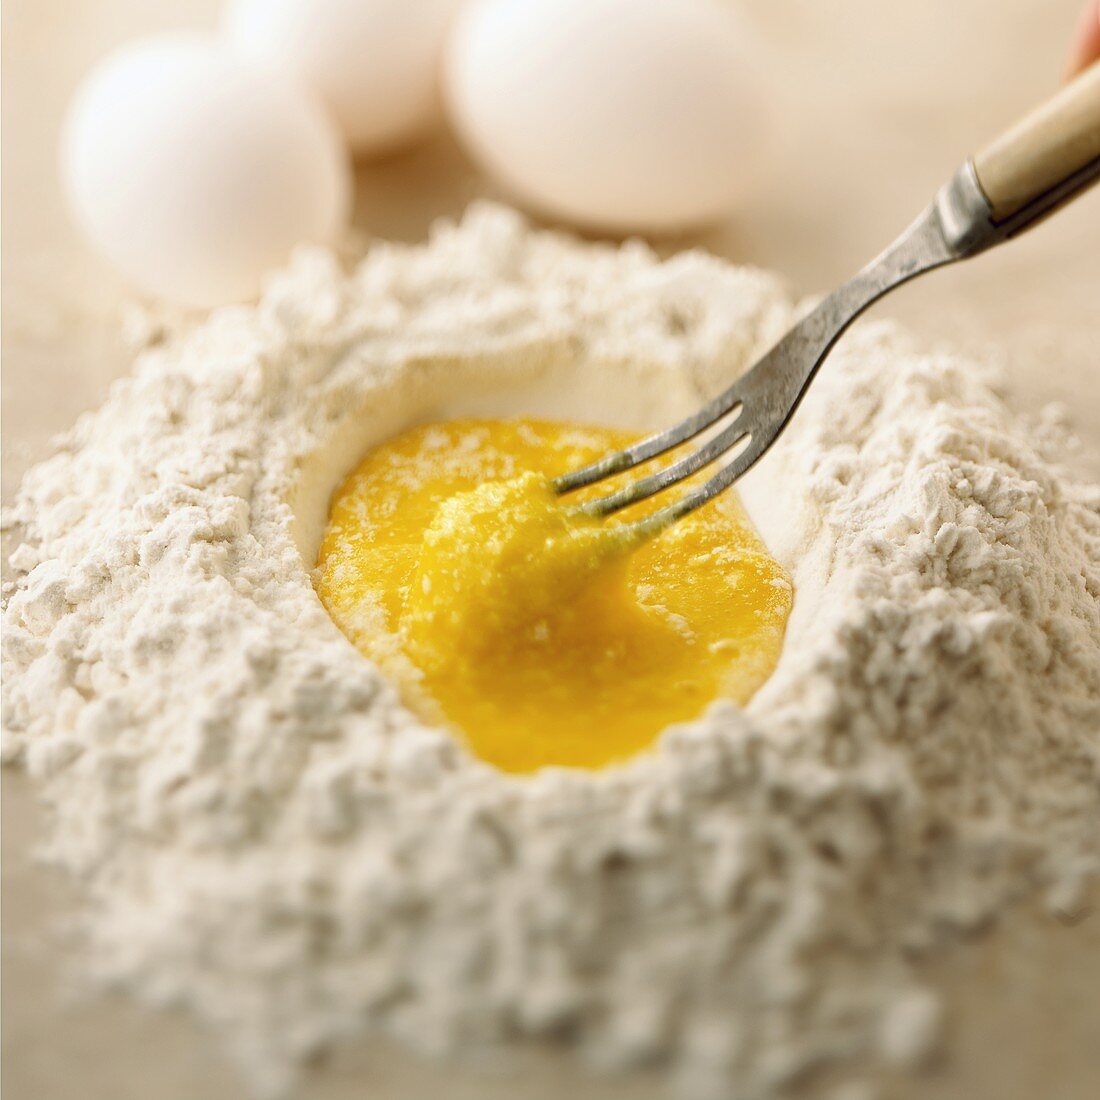 Making pasta dough: mixing egg with flour